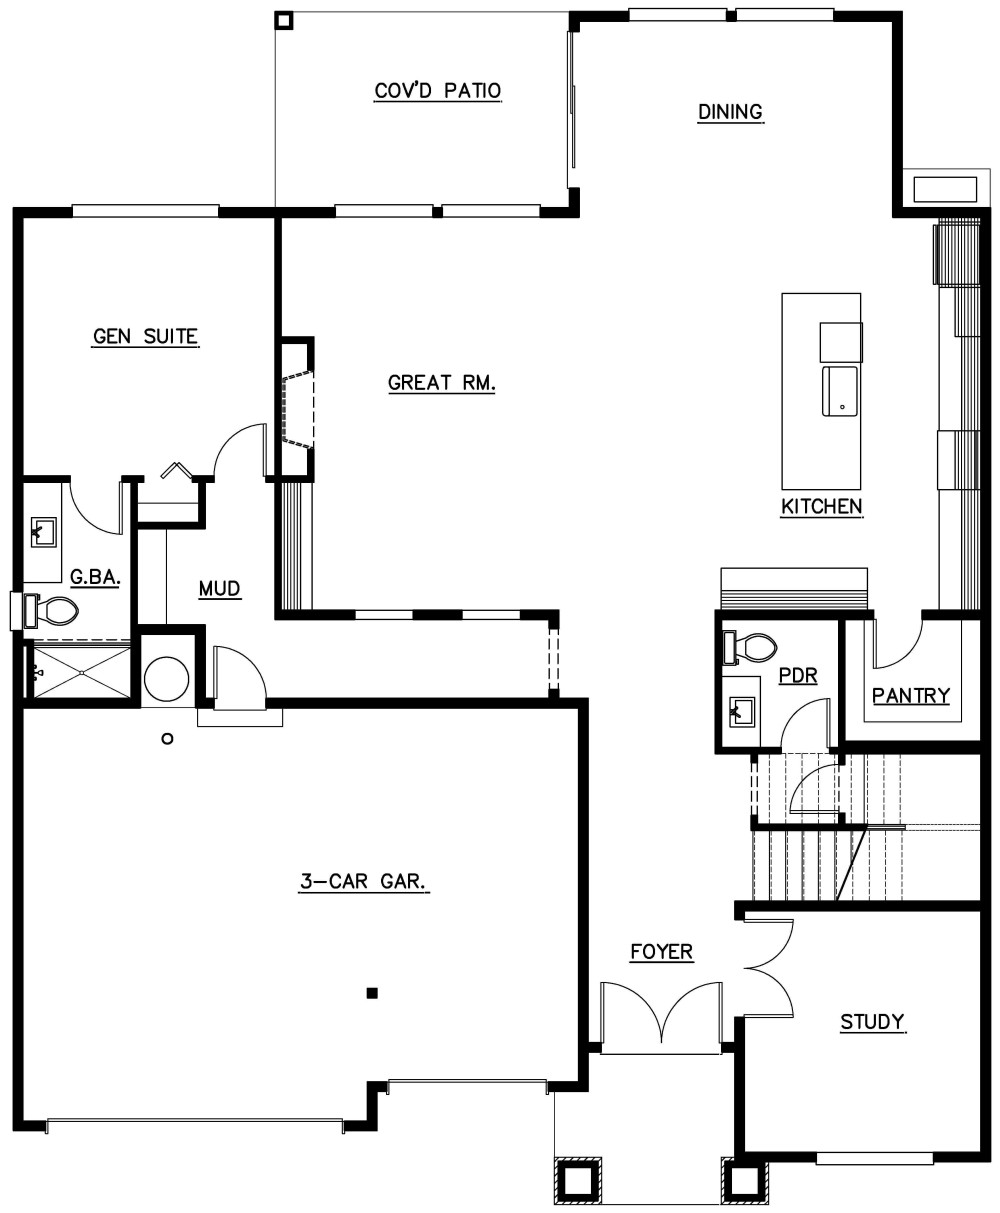 Main Floor Plan floorplan for the Pendrell - Lot 10 home